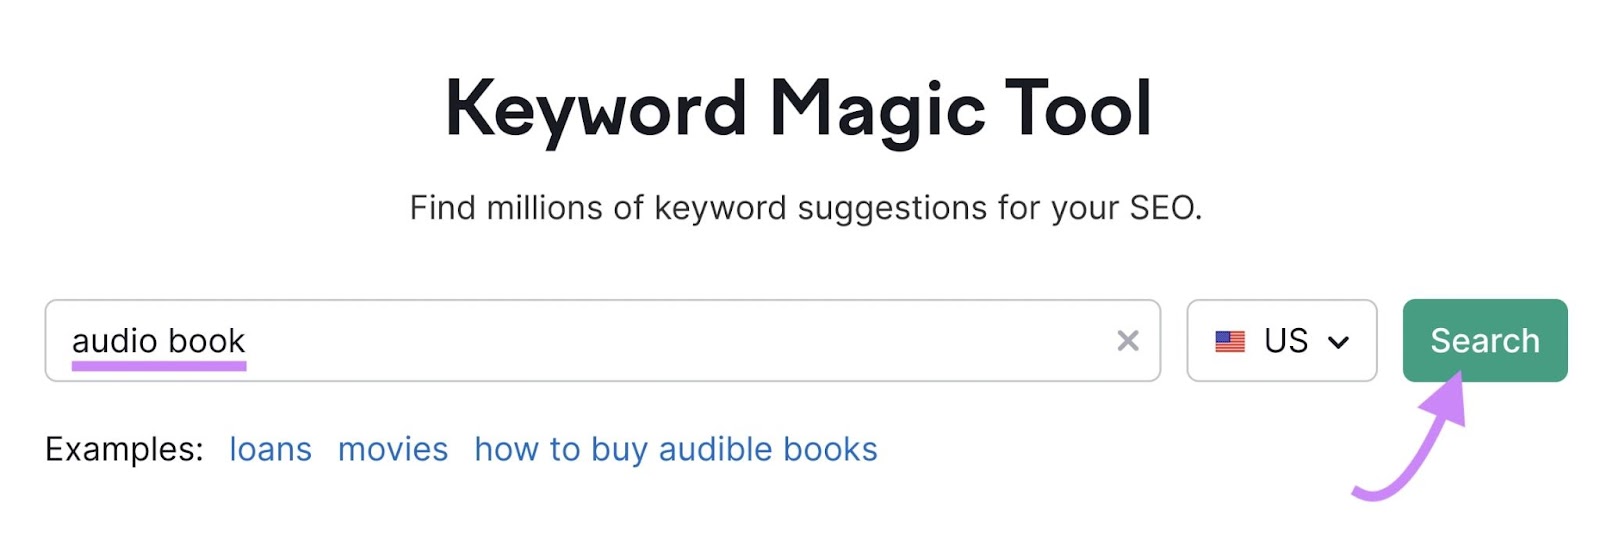 "audio book" entered into the Keyword Magic Tool search bar